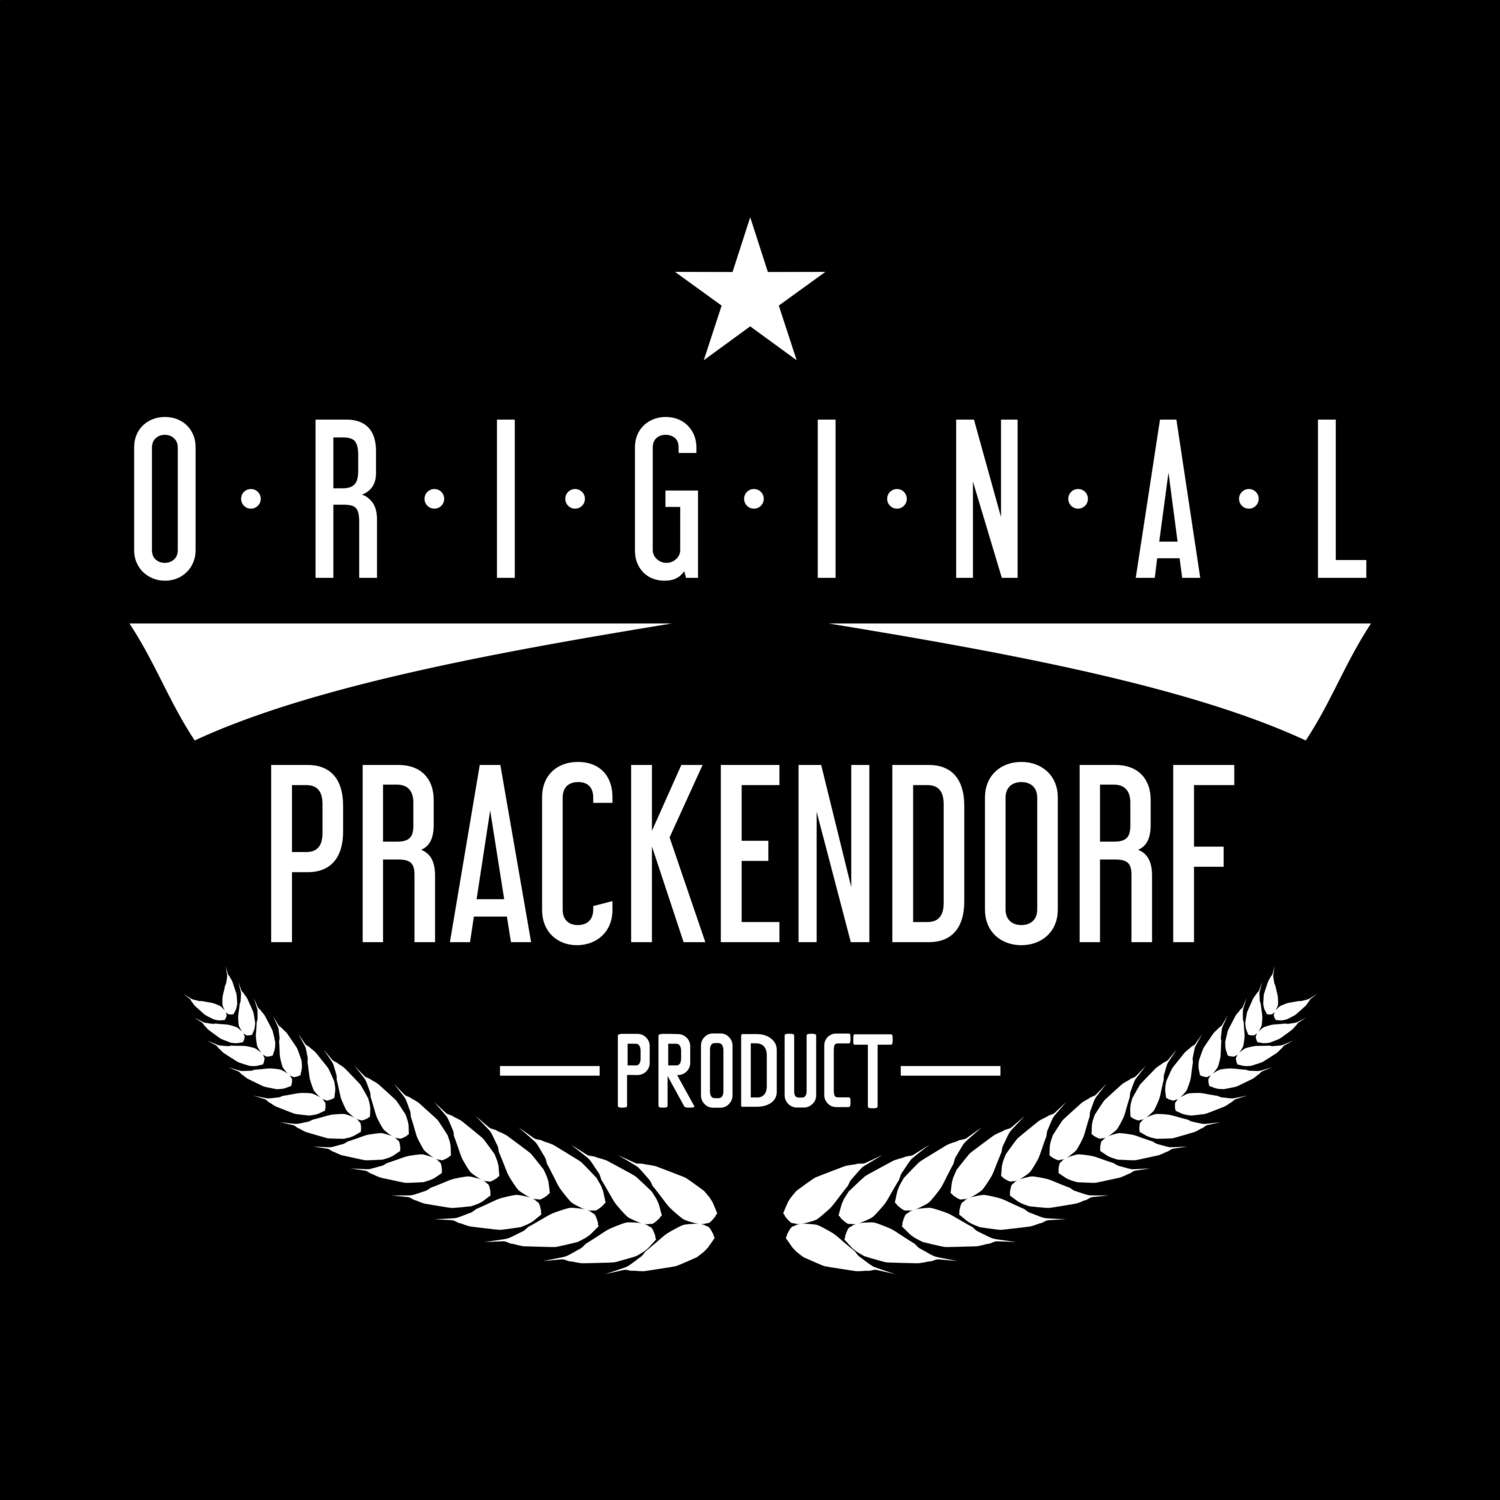 Prackendorf T-Shirt »Original Product«